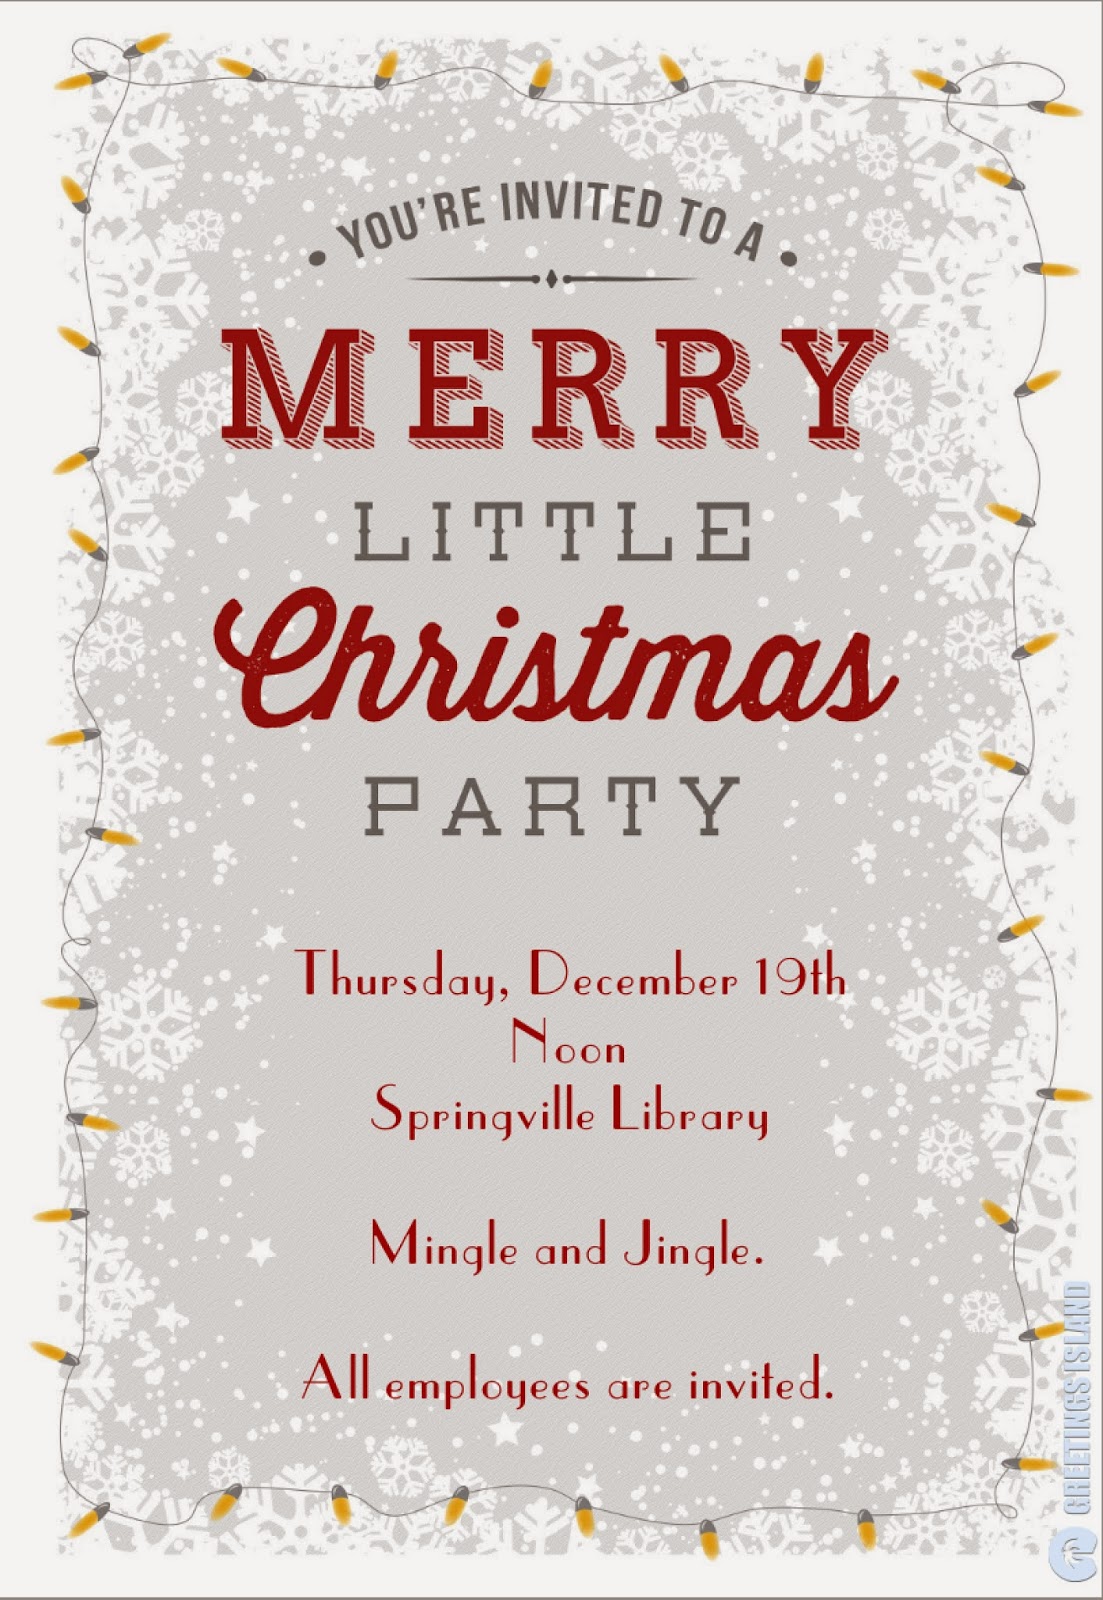 Springville City Employee News: Employee Christmas Party